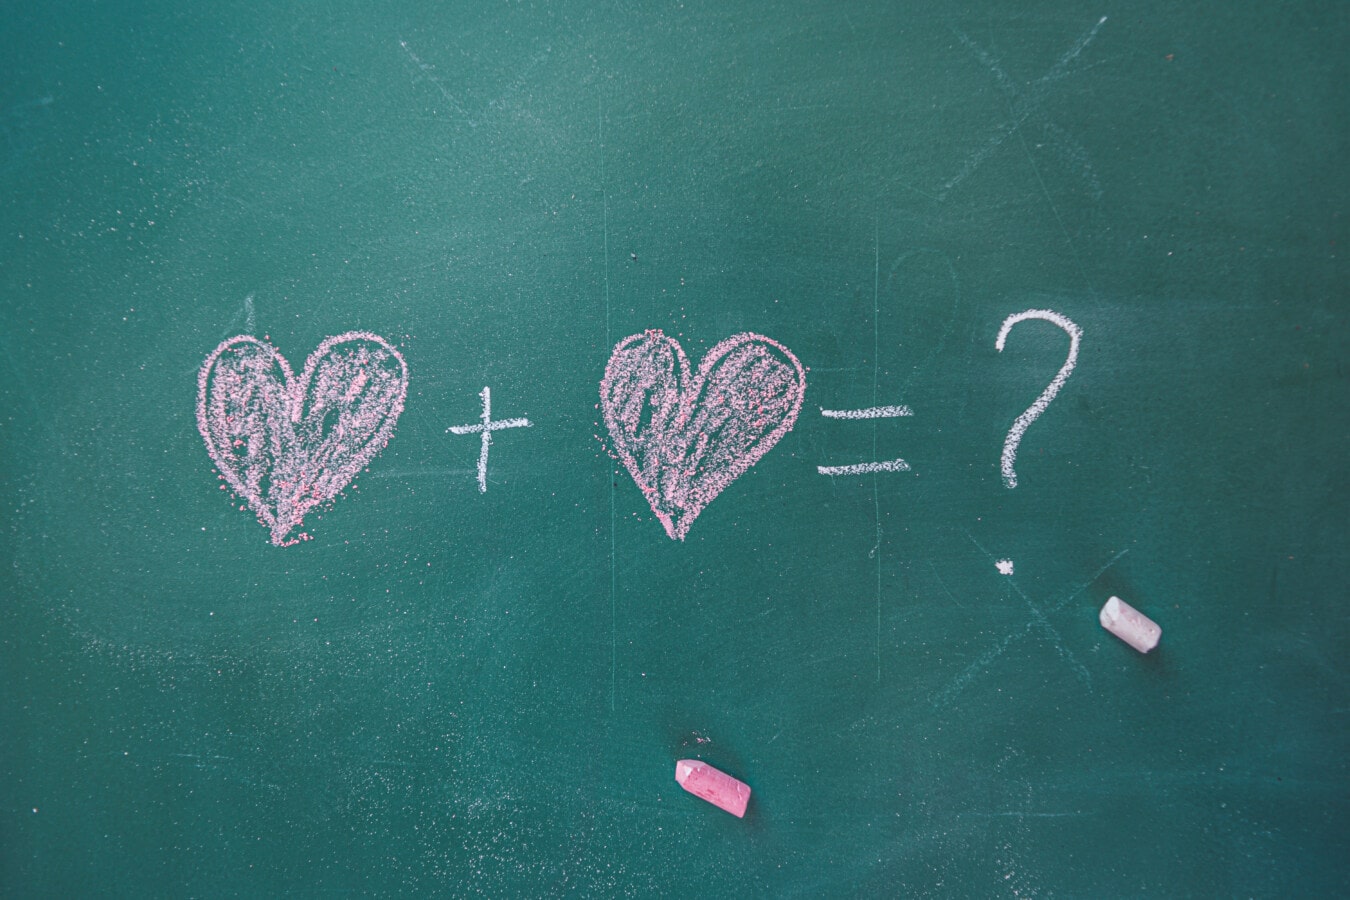 hearts, mathematics, question mark, chalk, blackboard, drawing chalk, love, writing, display, creativity